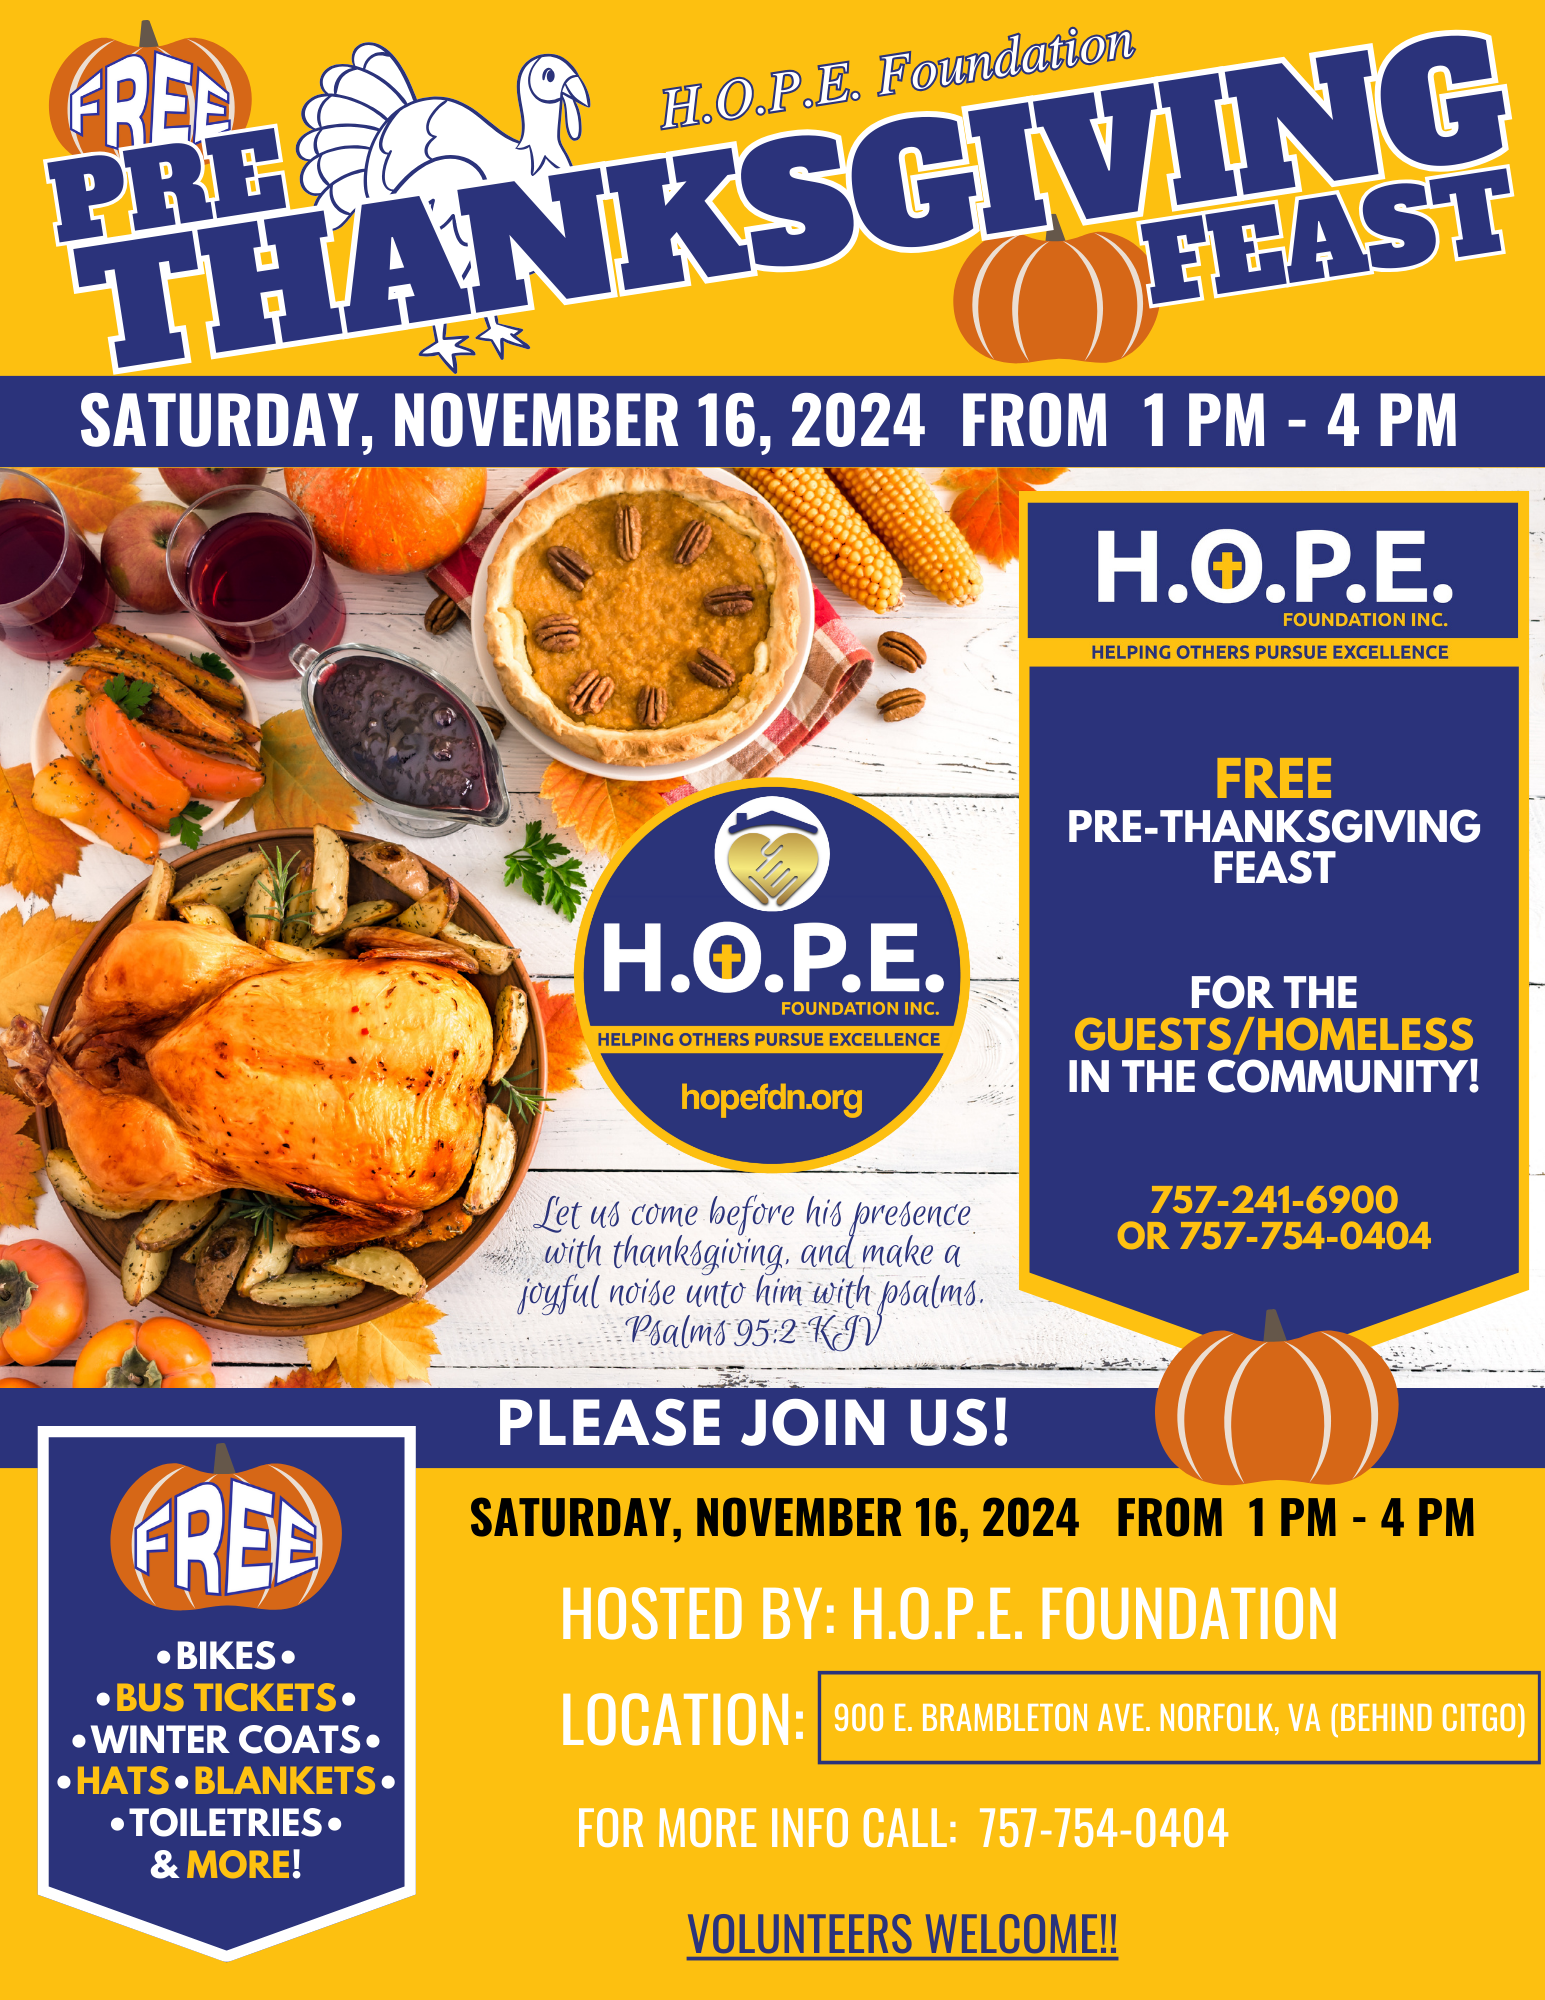 2024 H.O.P.E. Foundation Pre-Thanksgiving Feast